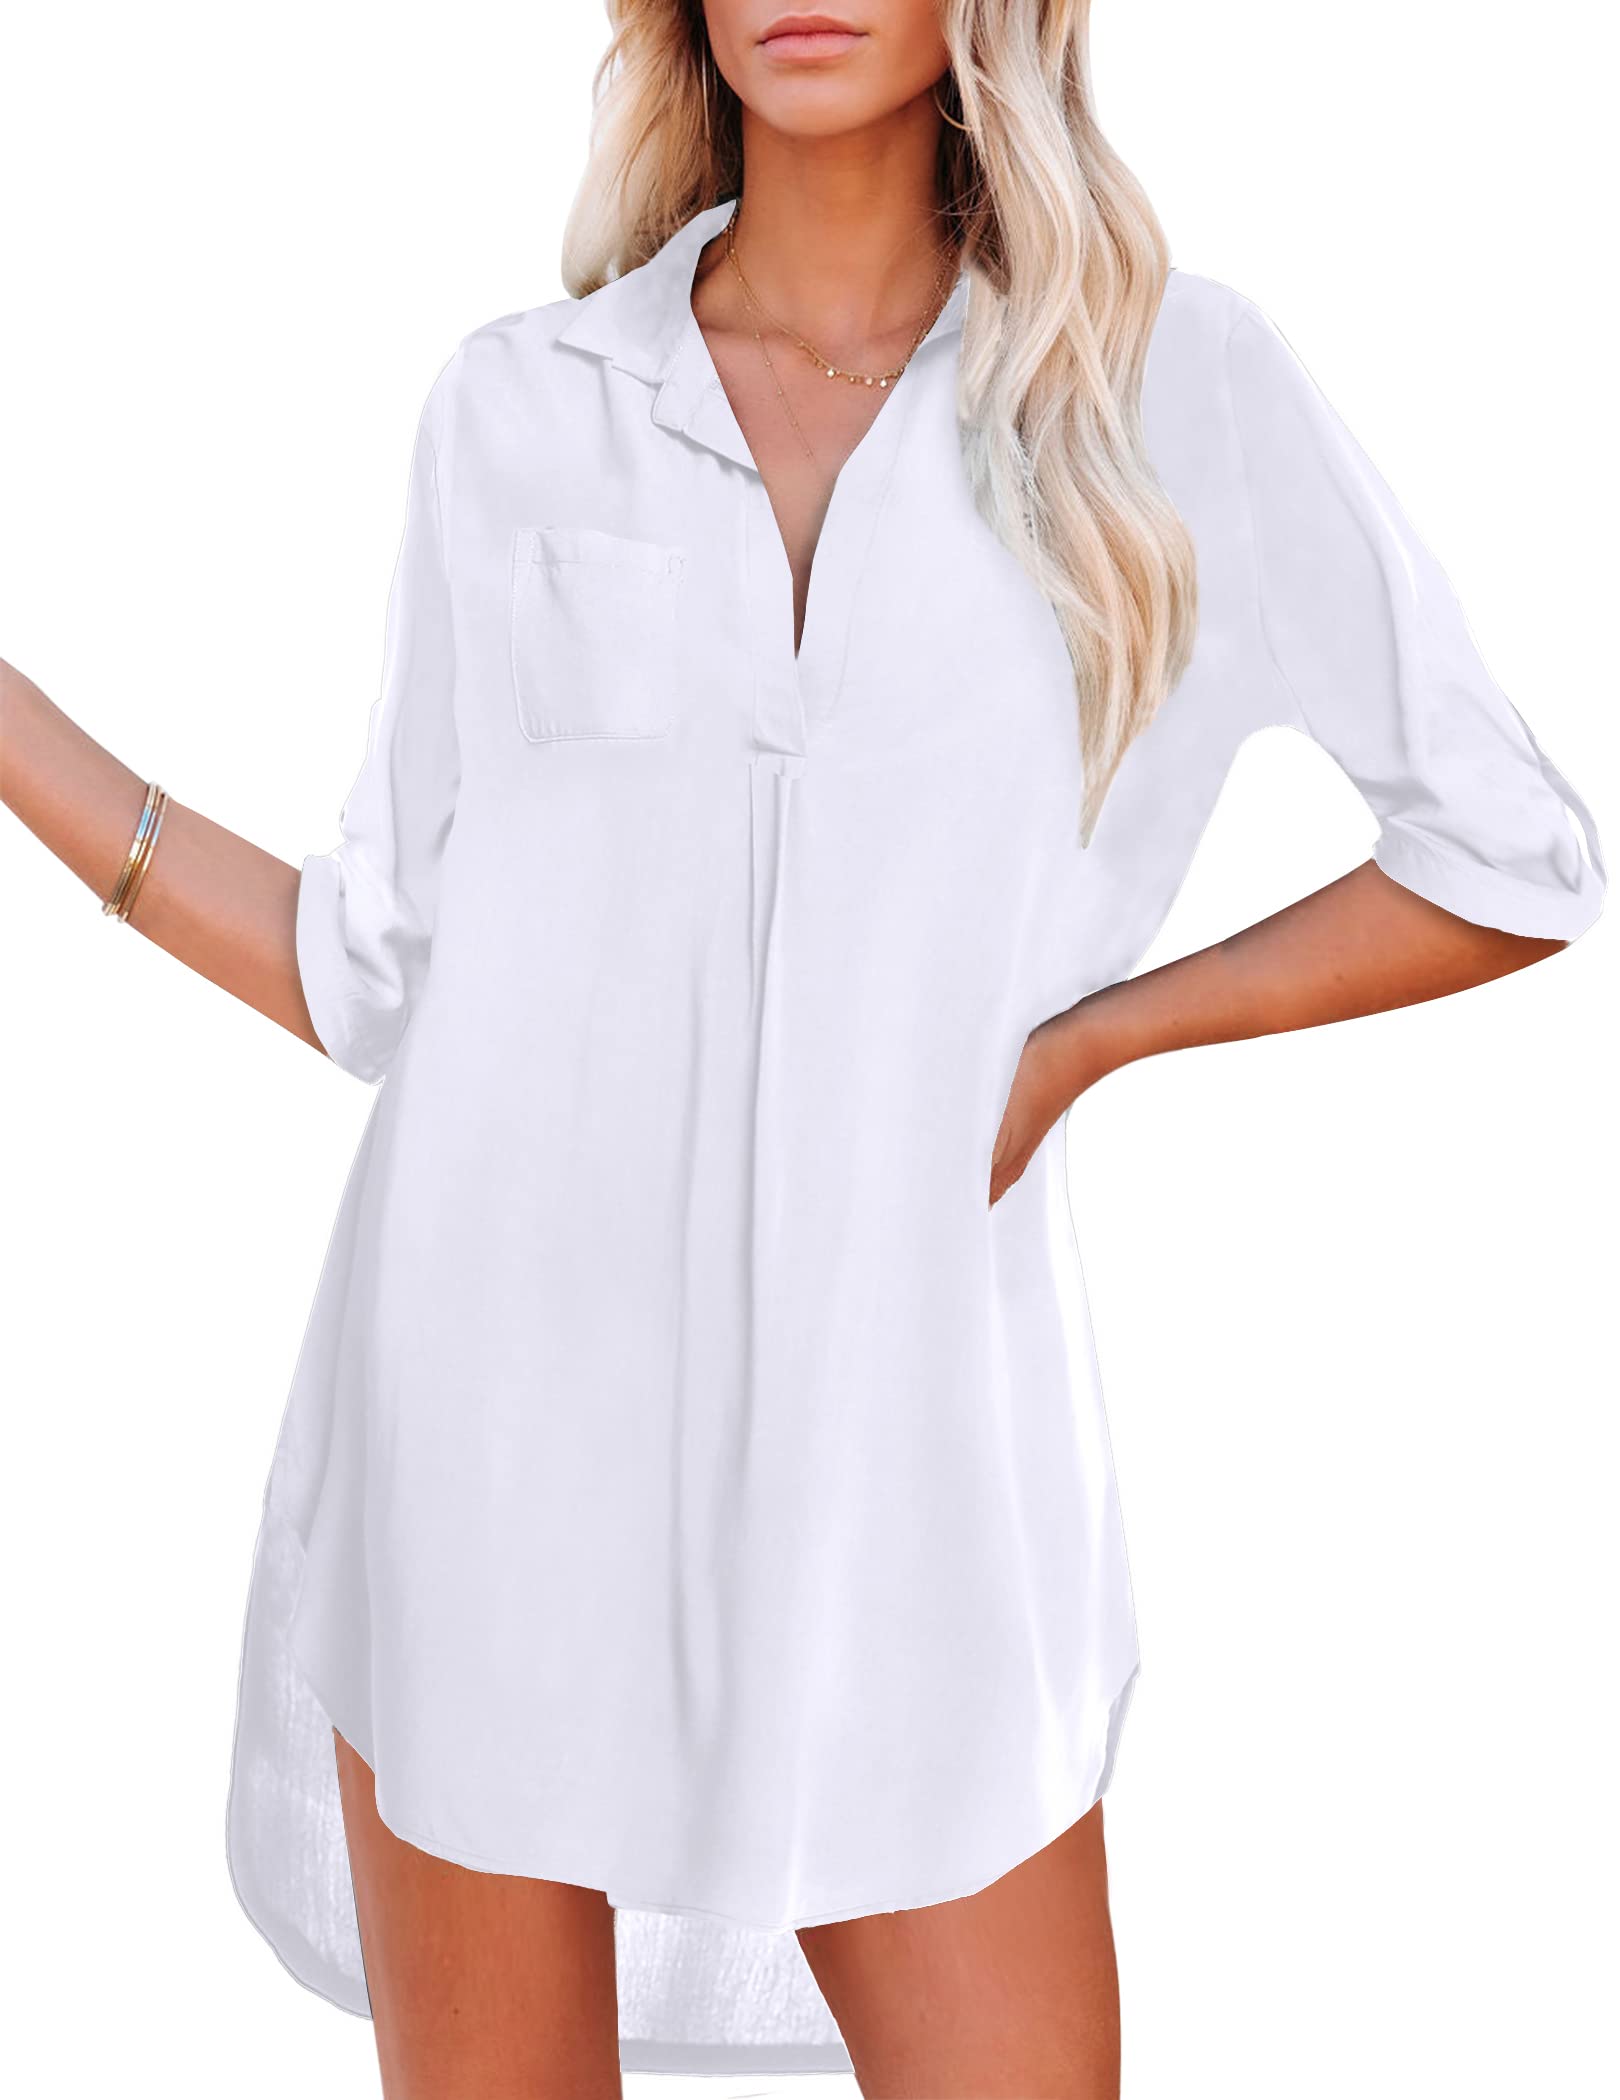 UNibelle Damen Strandkleid Hemdkleid Kleidung Strand Hemdkleid V-Ausschnitt Rock Sommer Cuffed Sleeve Shirts Tops Weiß, Medium